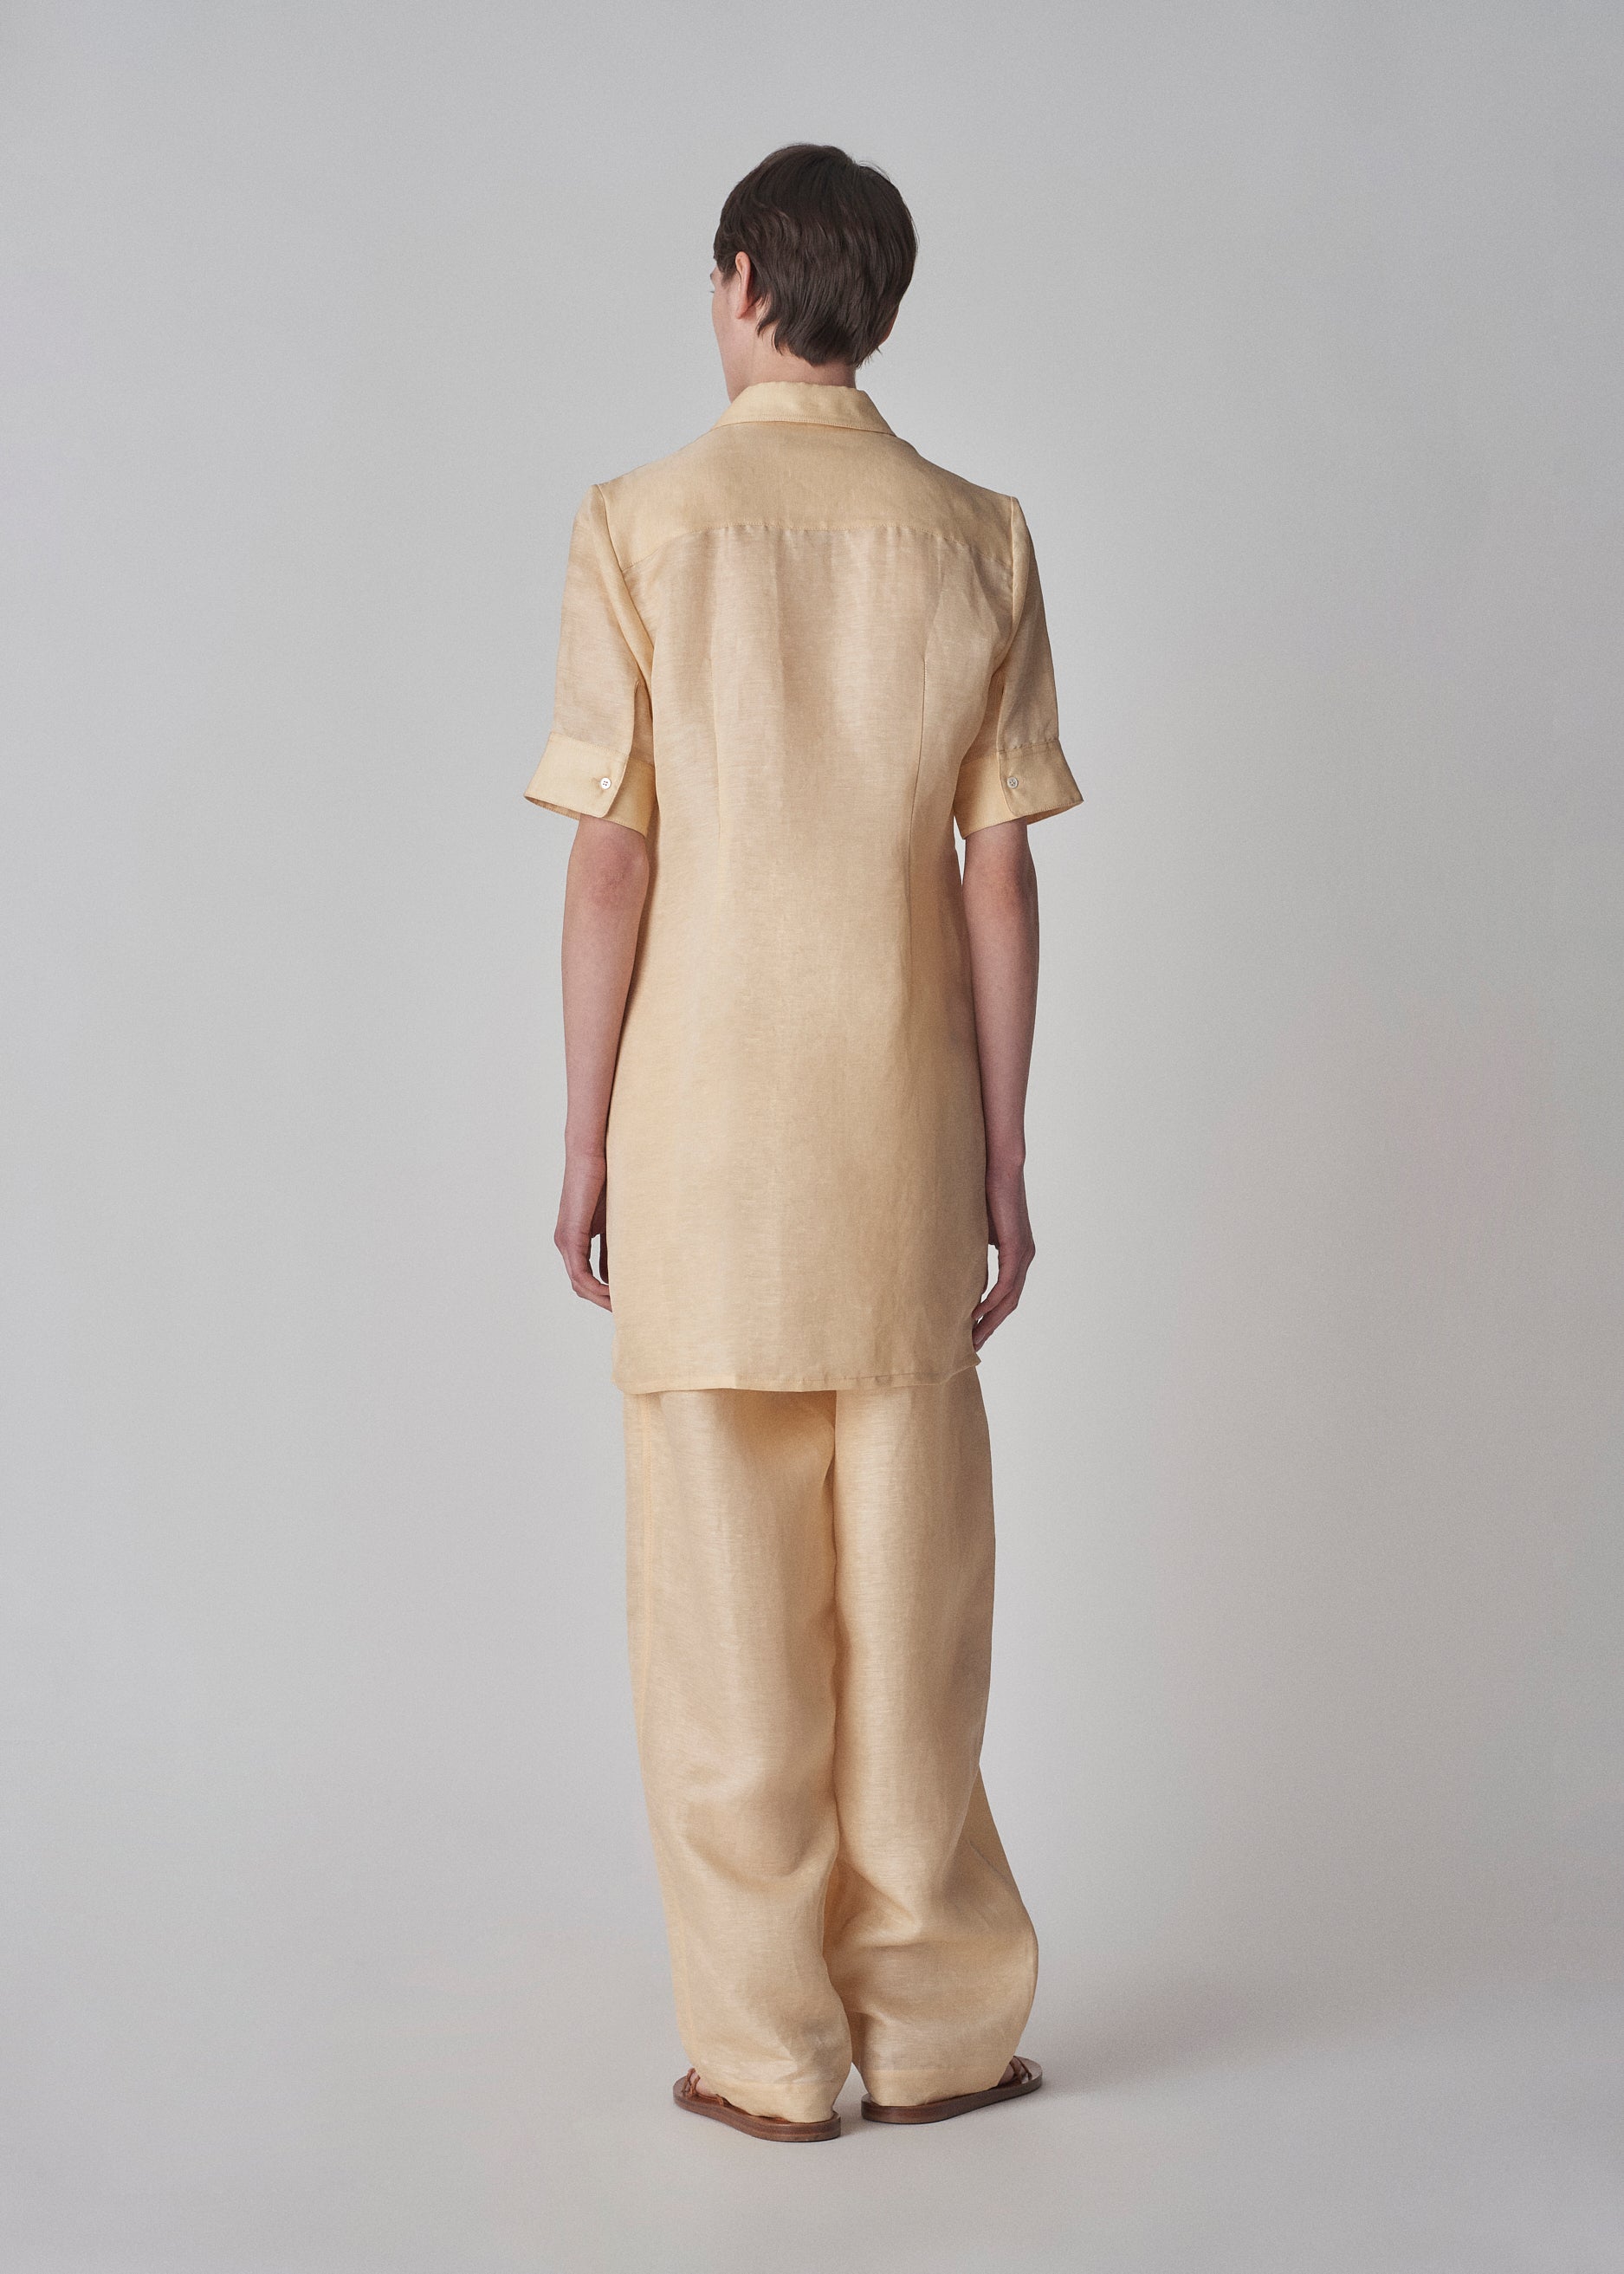 Short Sleeve Shirt Dress in Organza - Custard - CO Collections